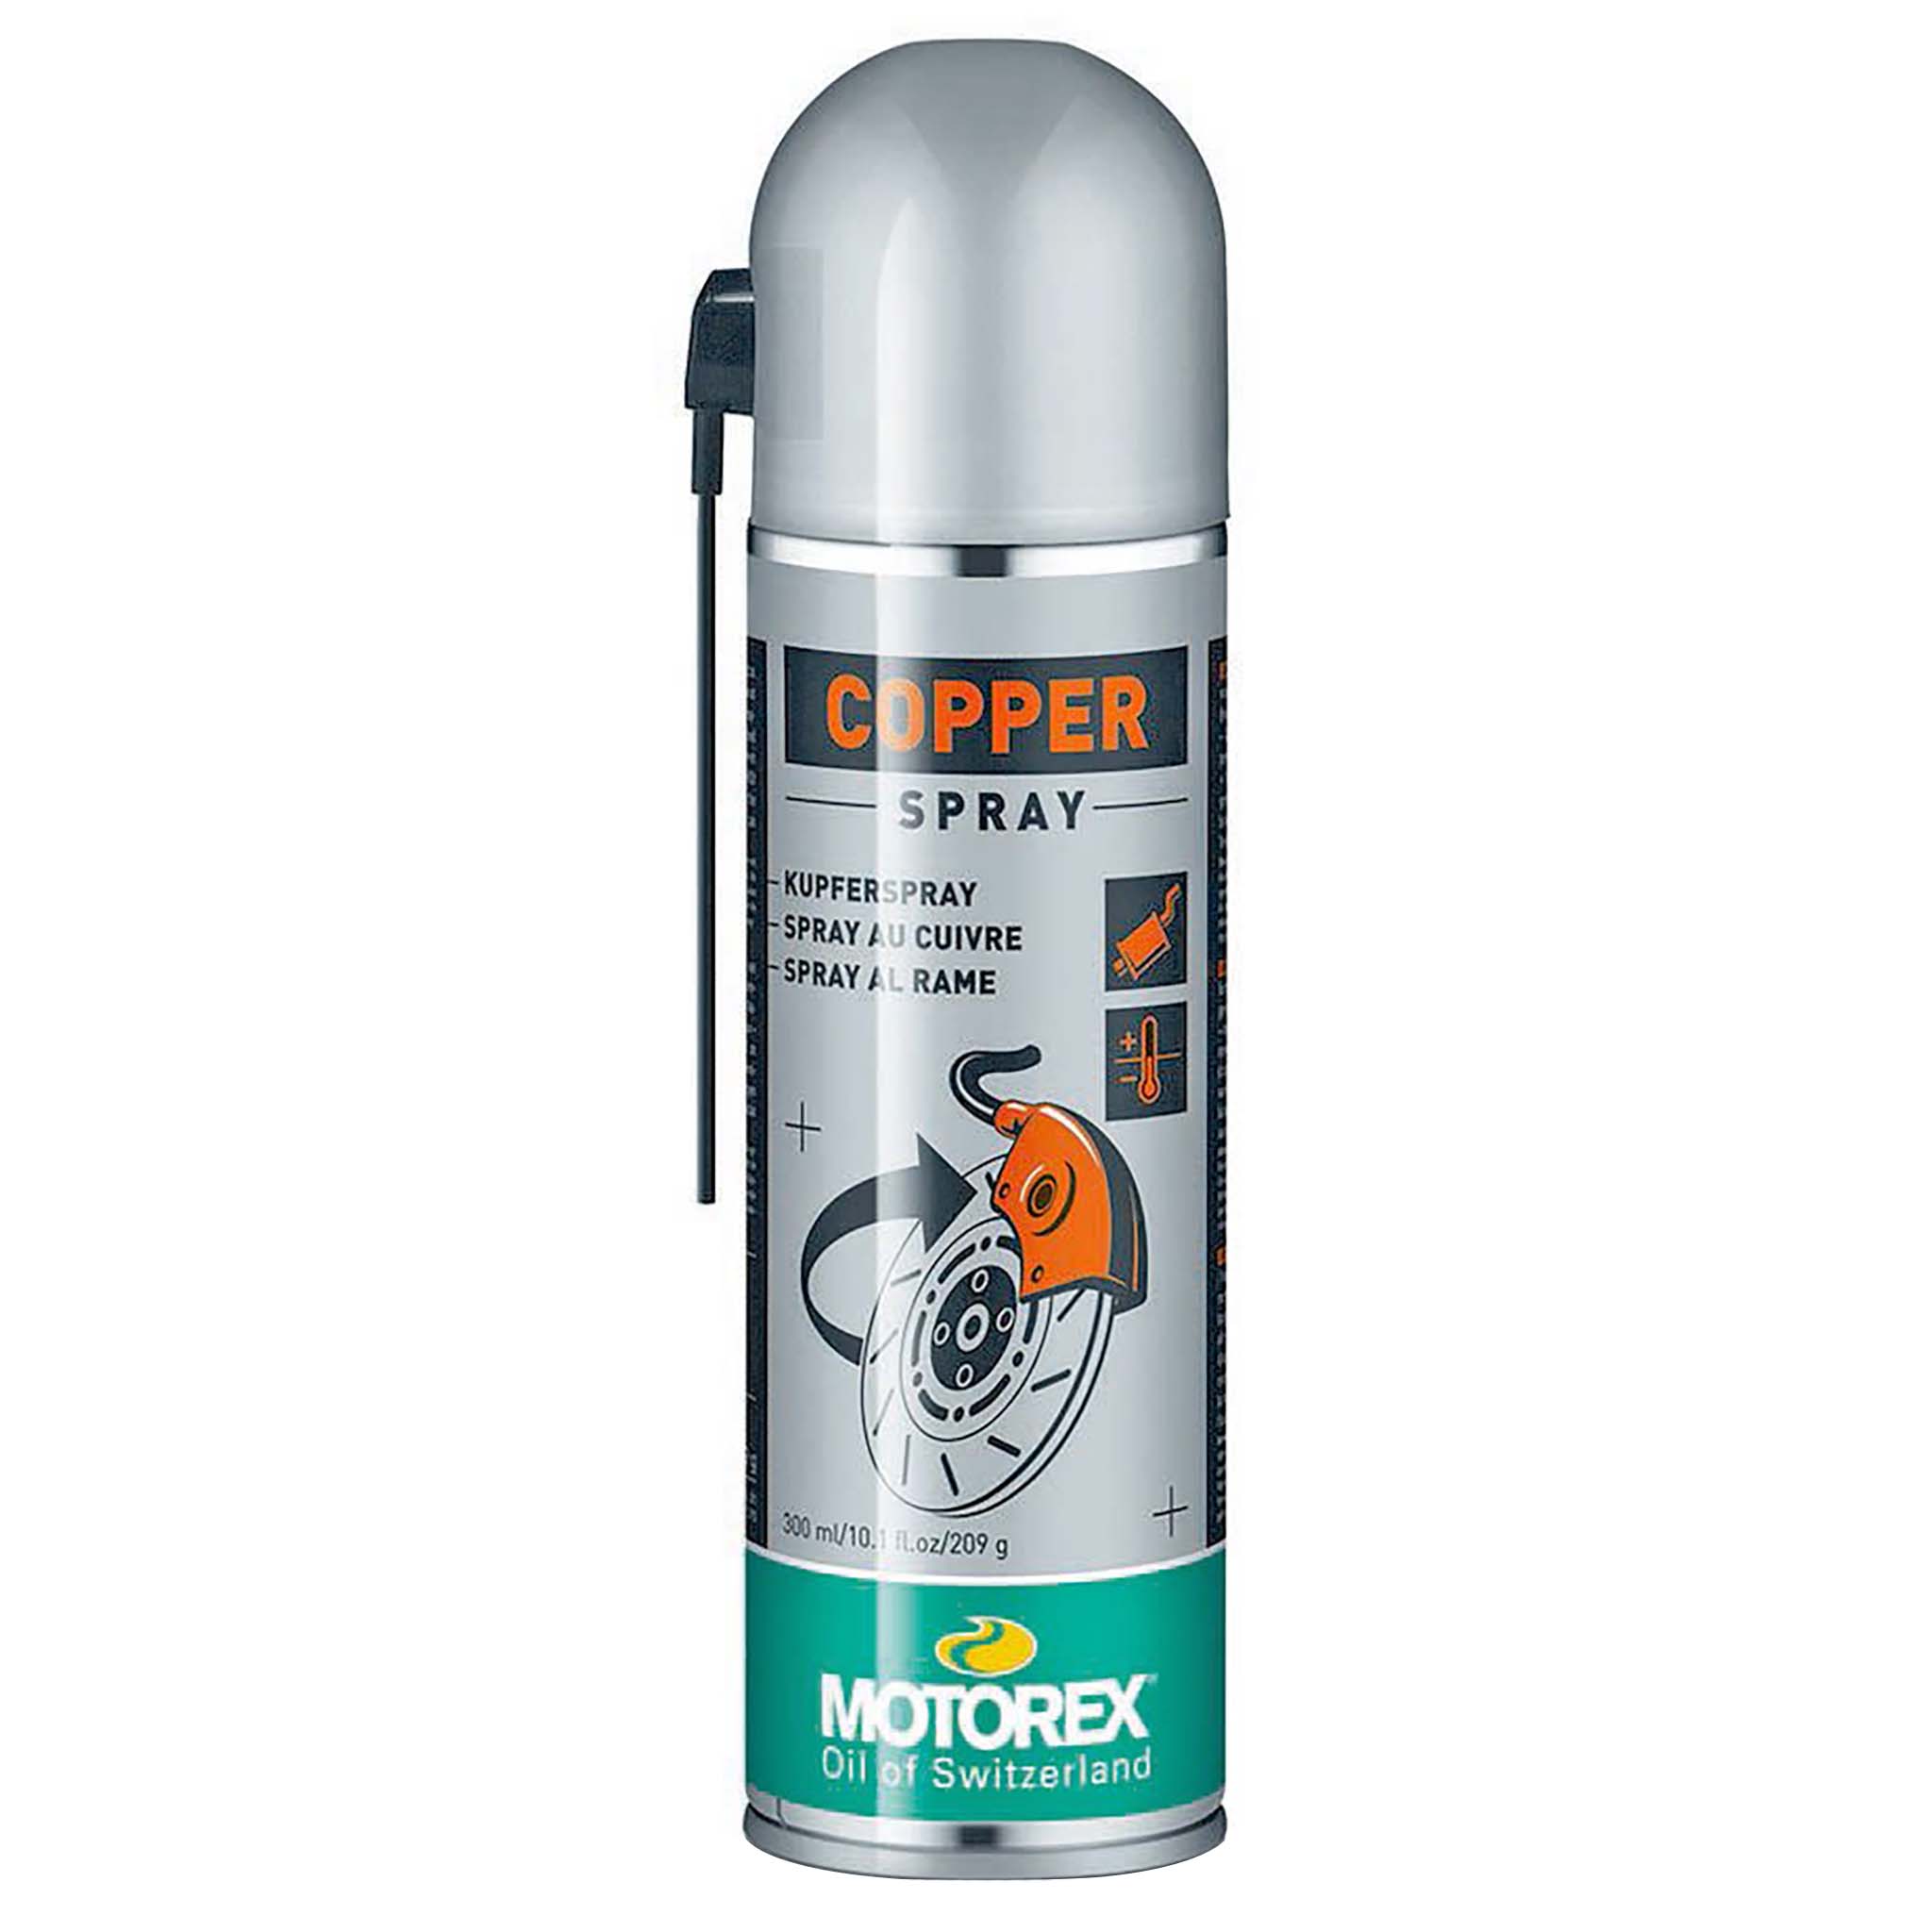 Motorex Copper Spray, 300ml Aerosol